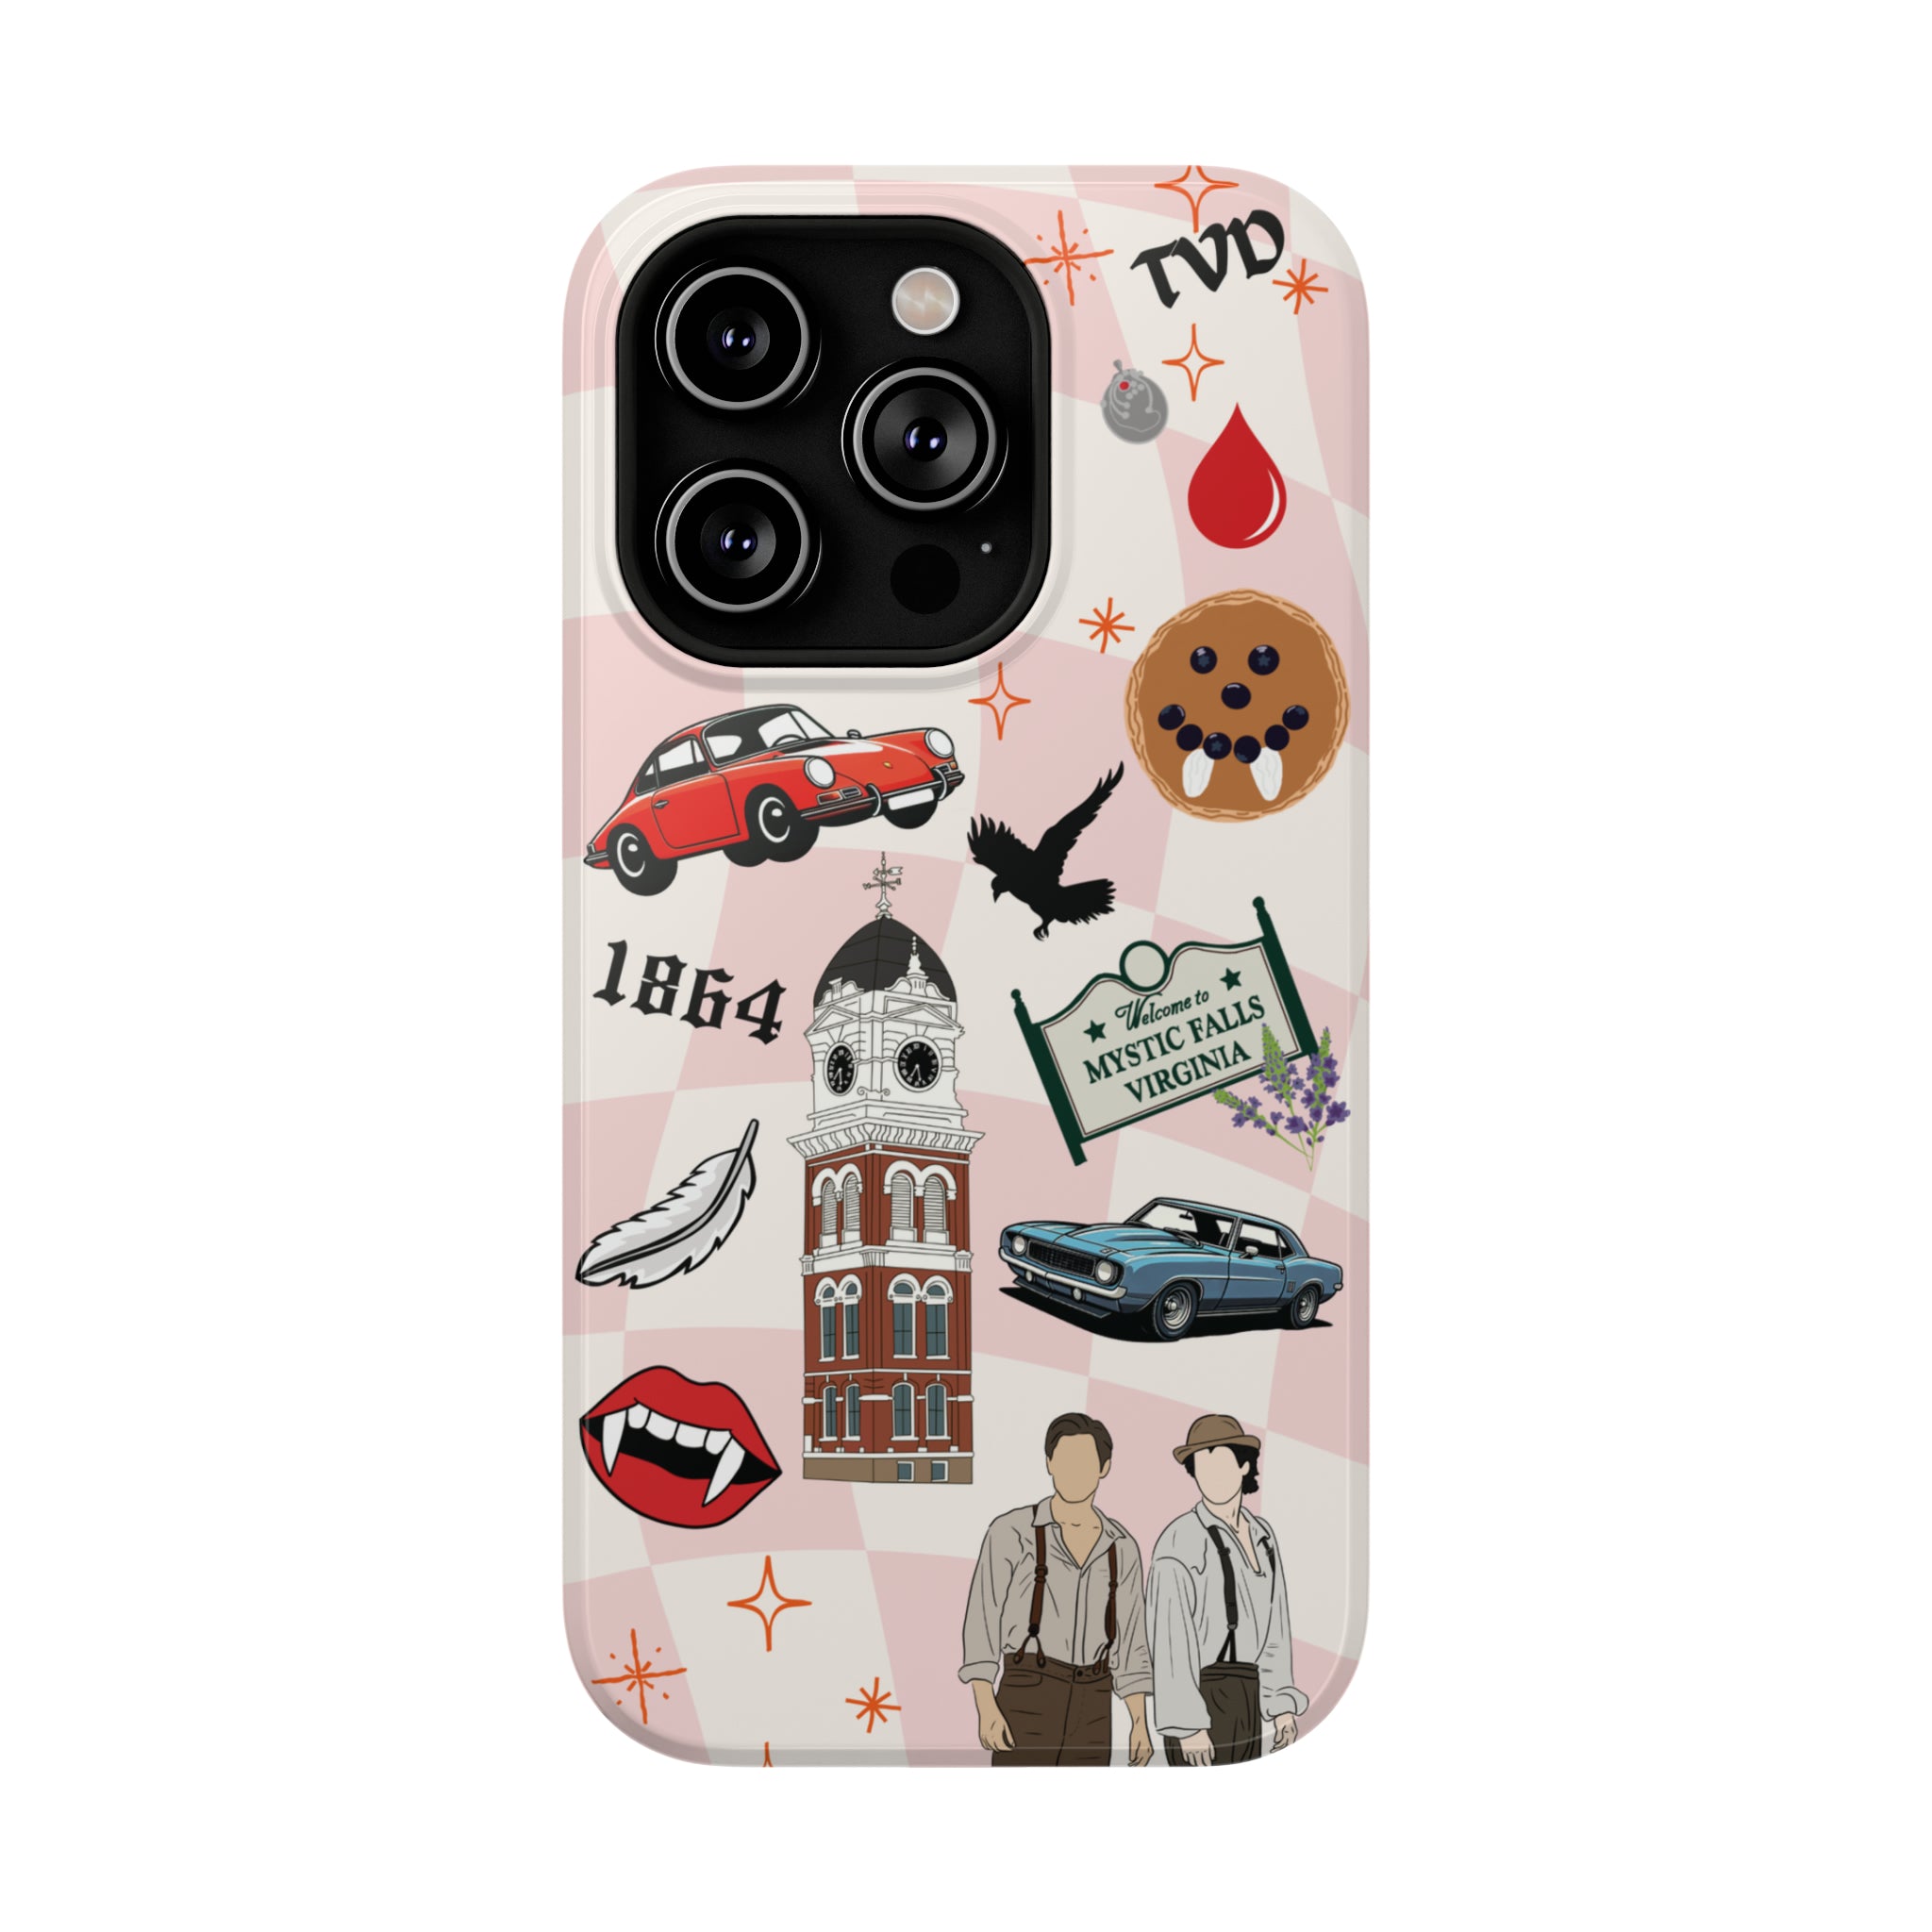 TVD Phone Case - Pink